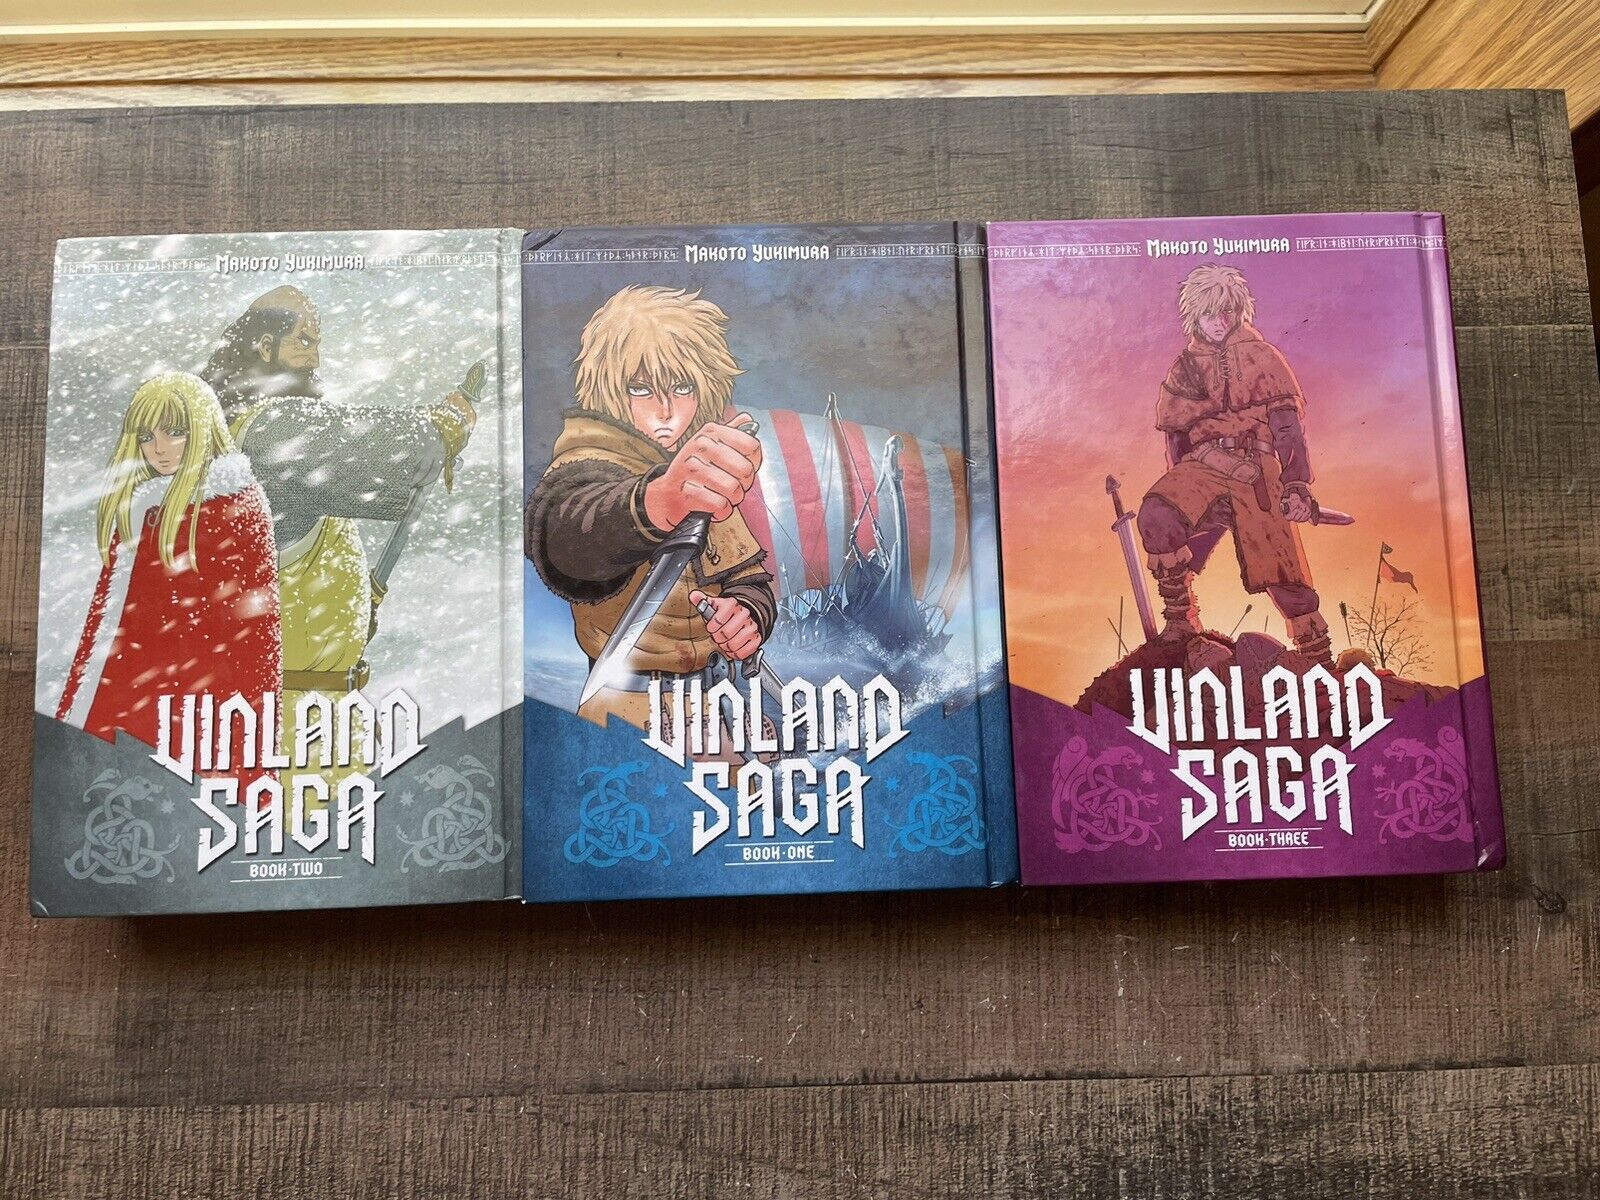 Vinland Saga Manga English Hardcover Volume 1-3 Lot, 2013, Kodansha Comics